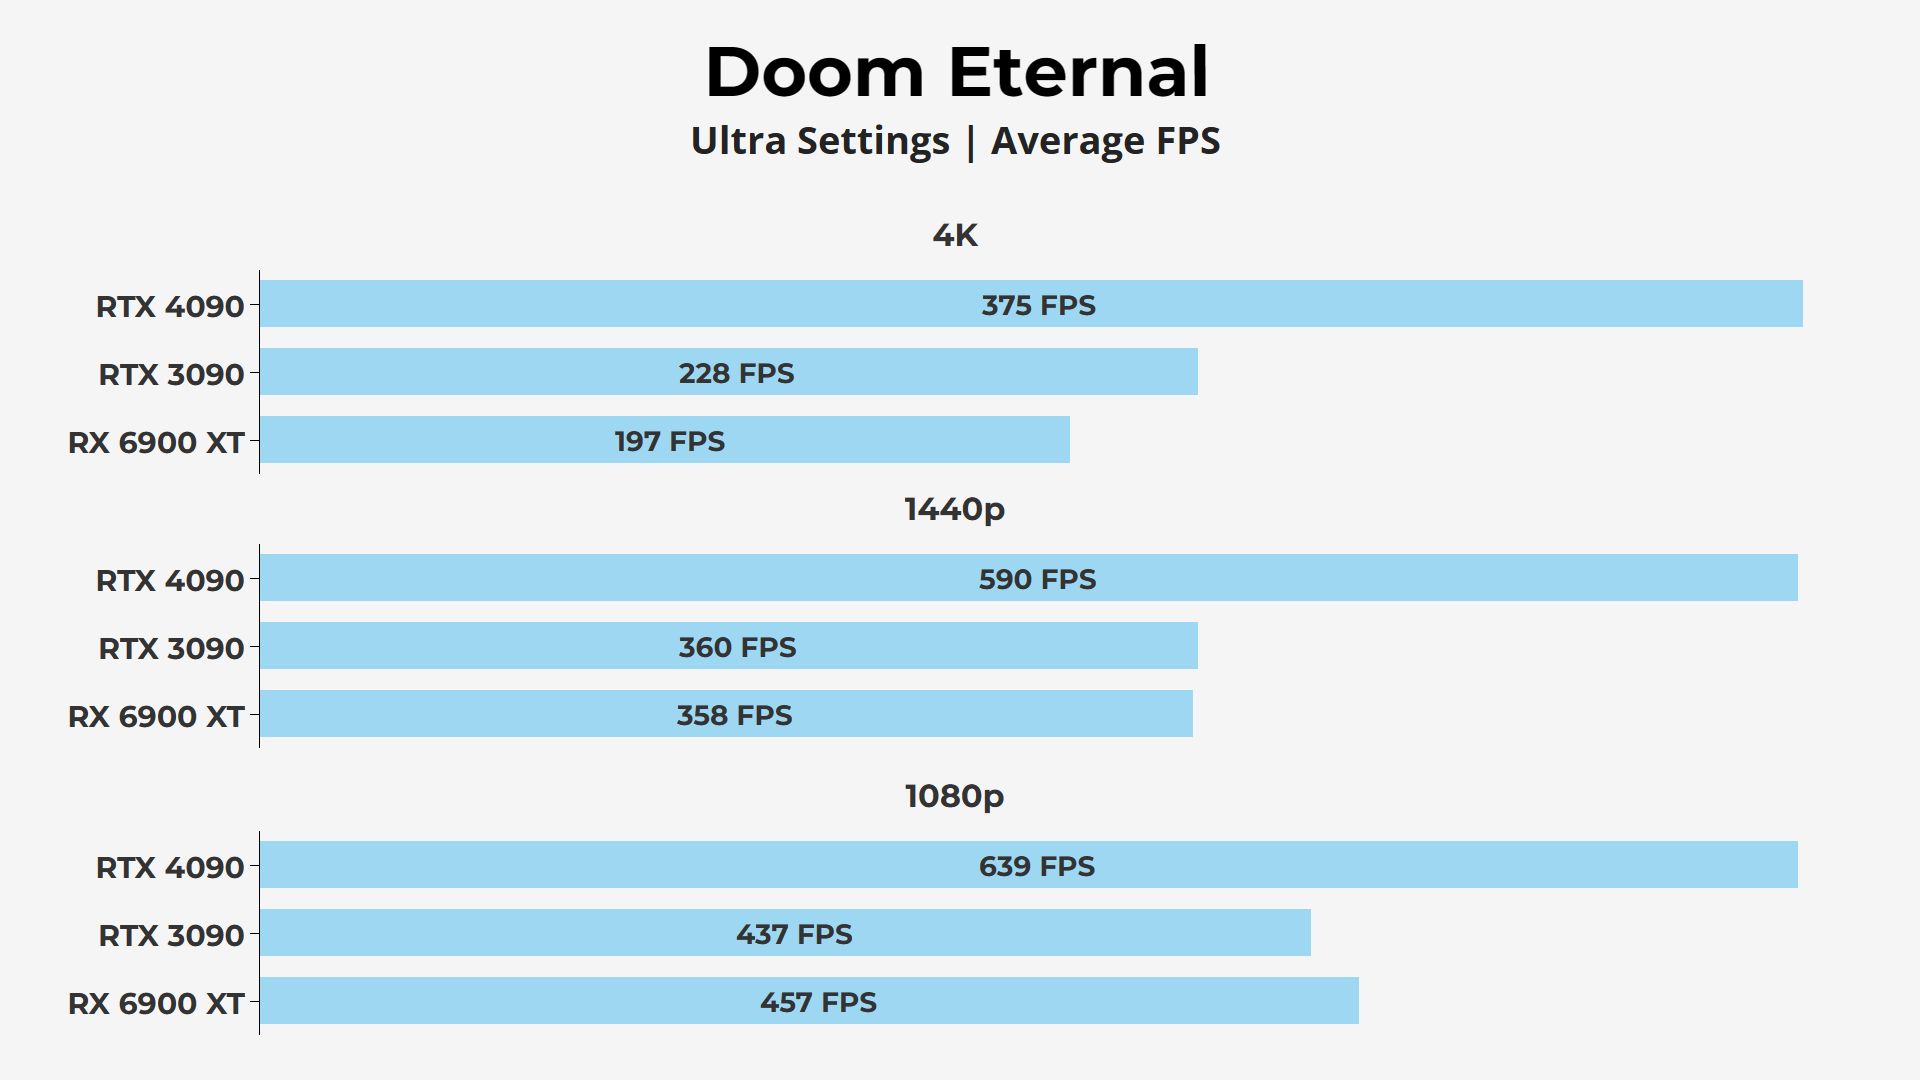 Doom Eternal RTX 4090